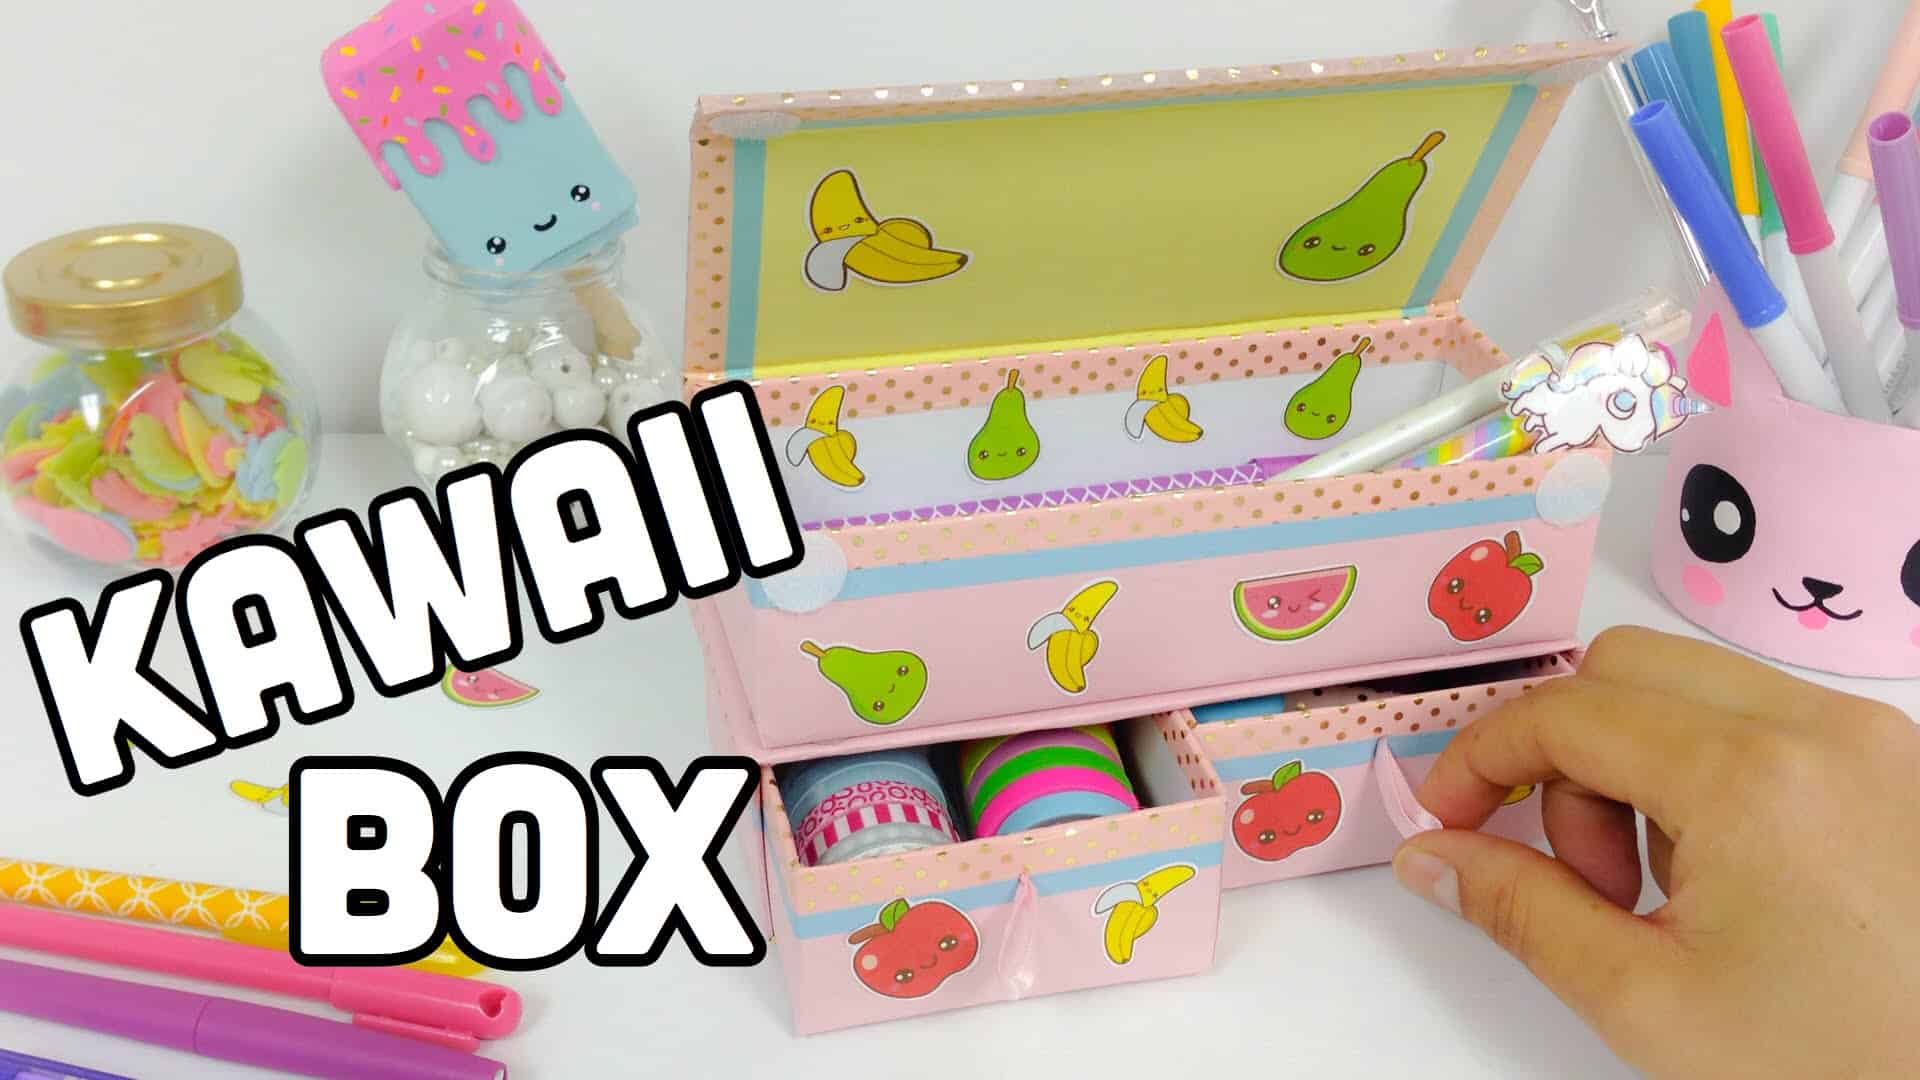 Kawaii stationery box